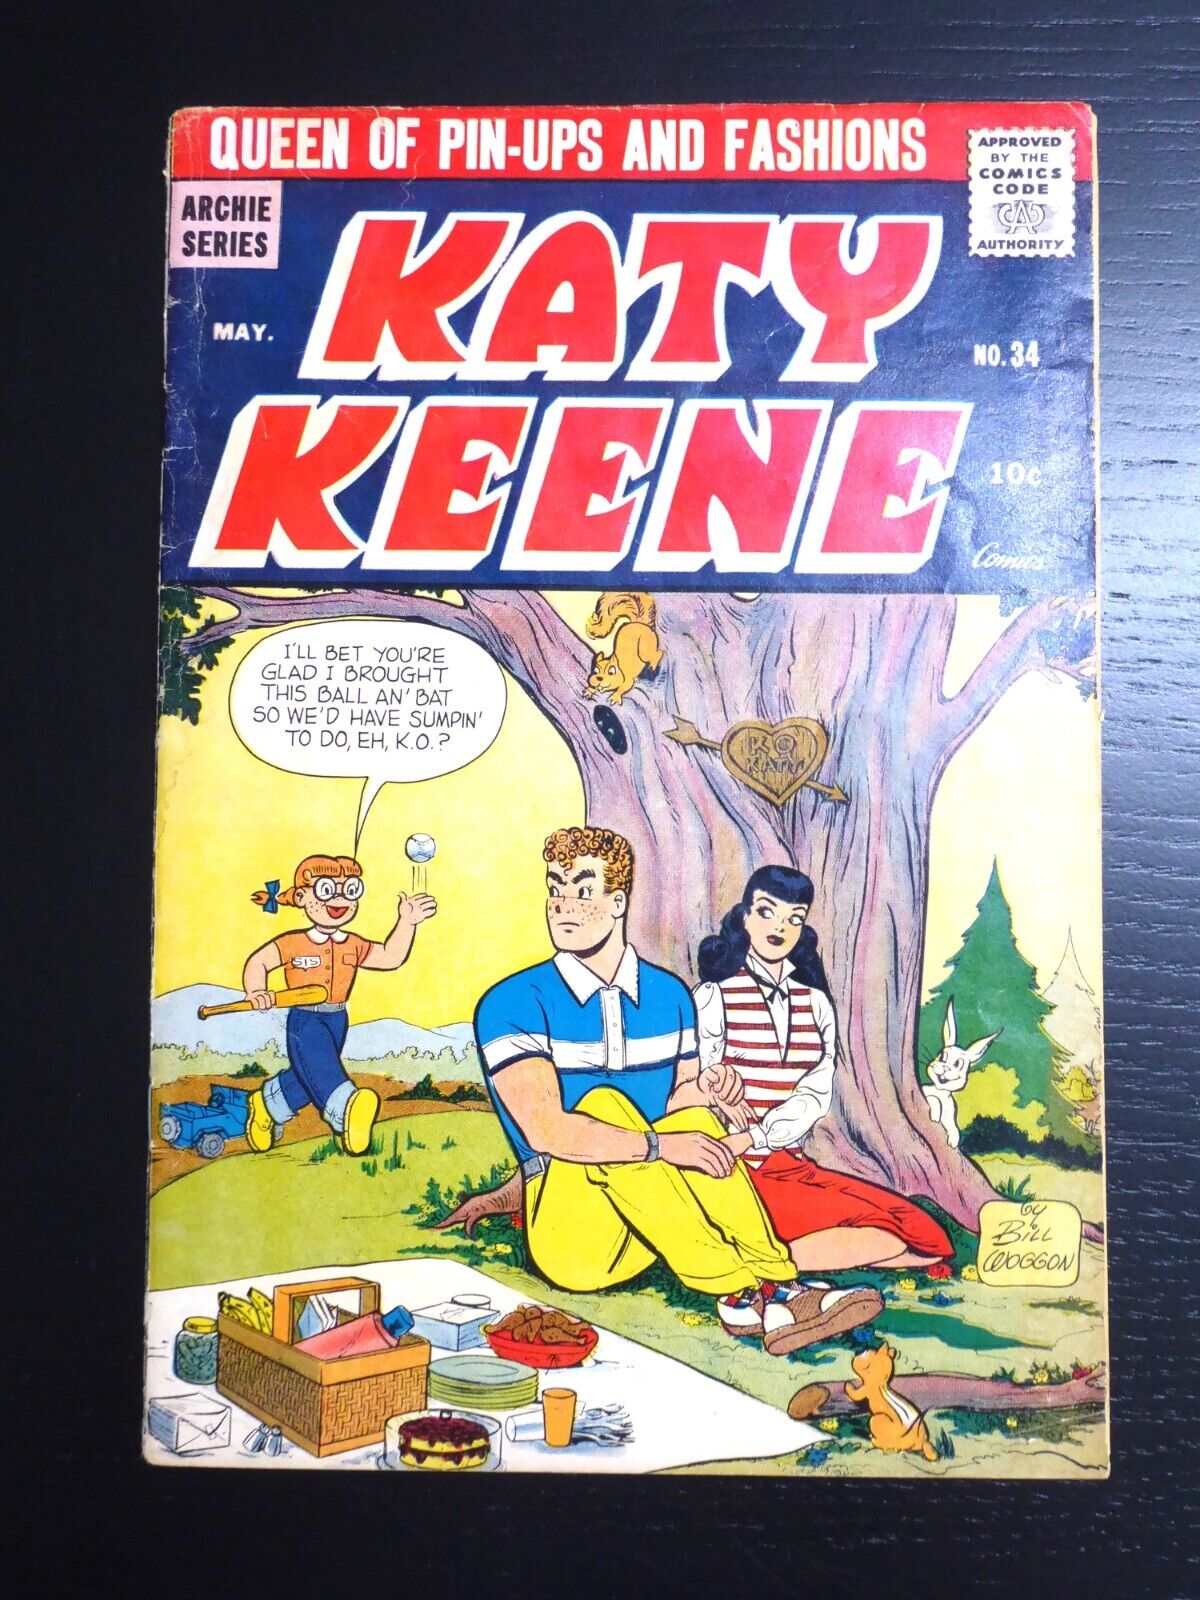 Katy Keene #34, May 1957, G, Mickey Mantle Ad, Baseball Cover by Bill Woggon